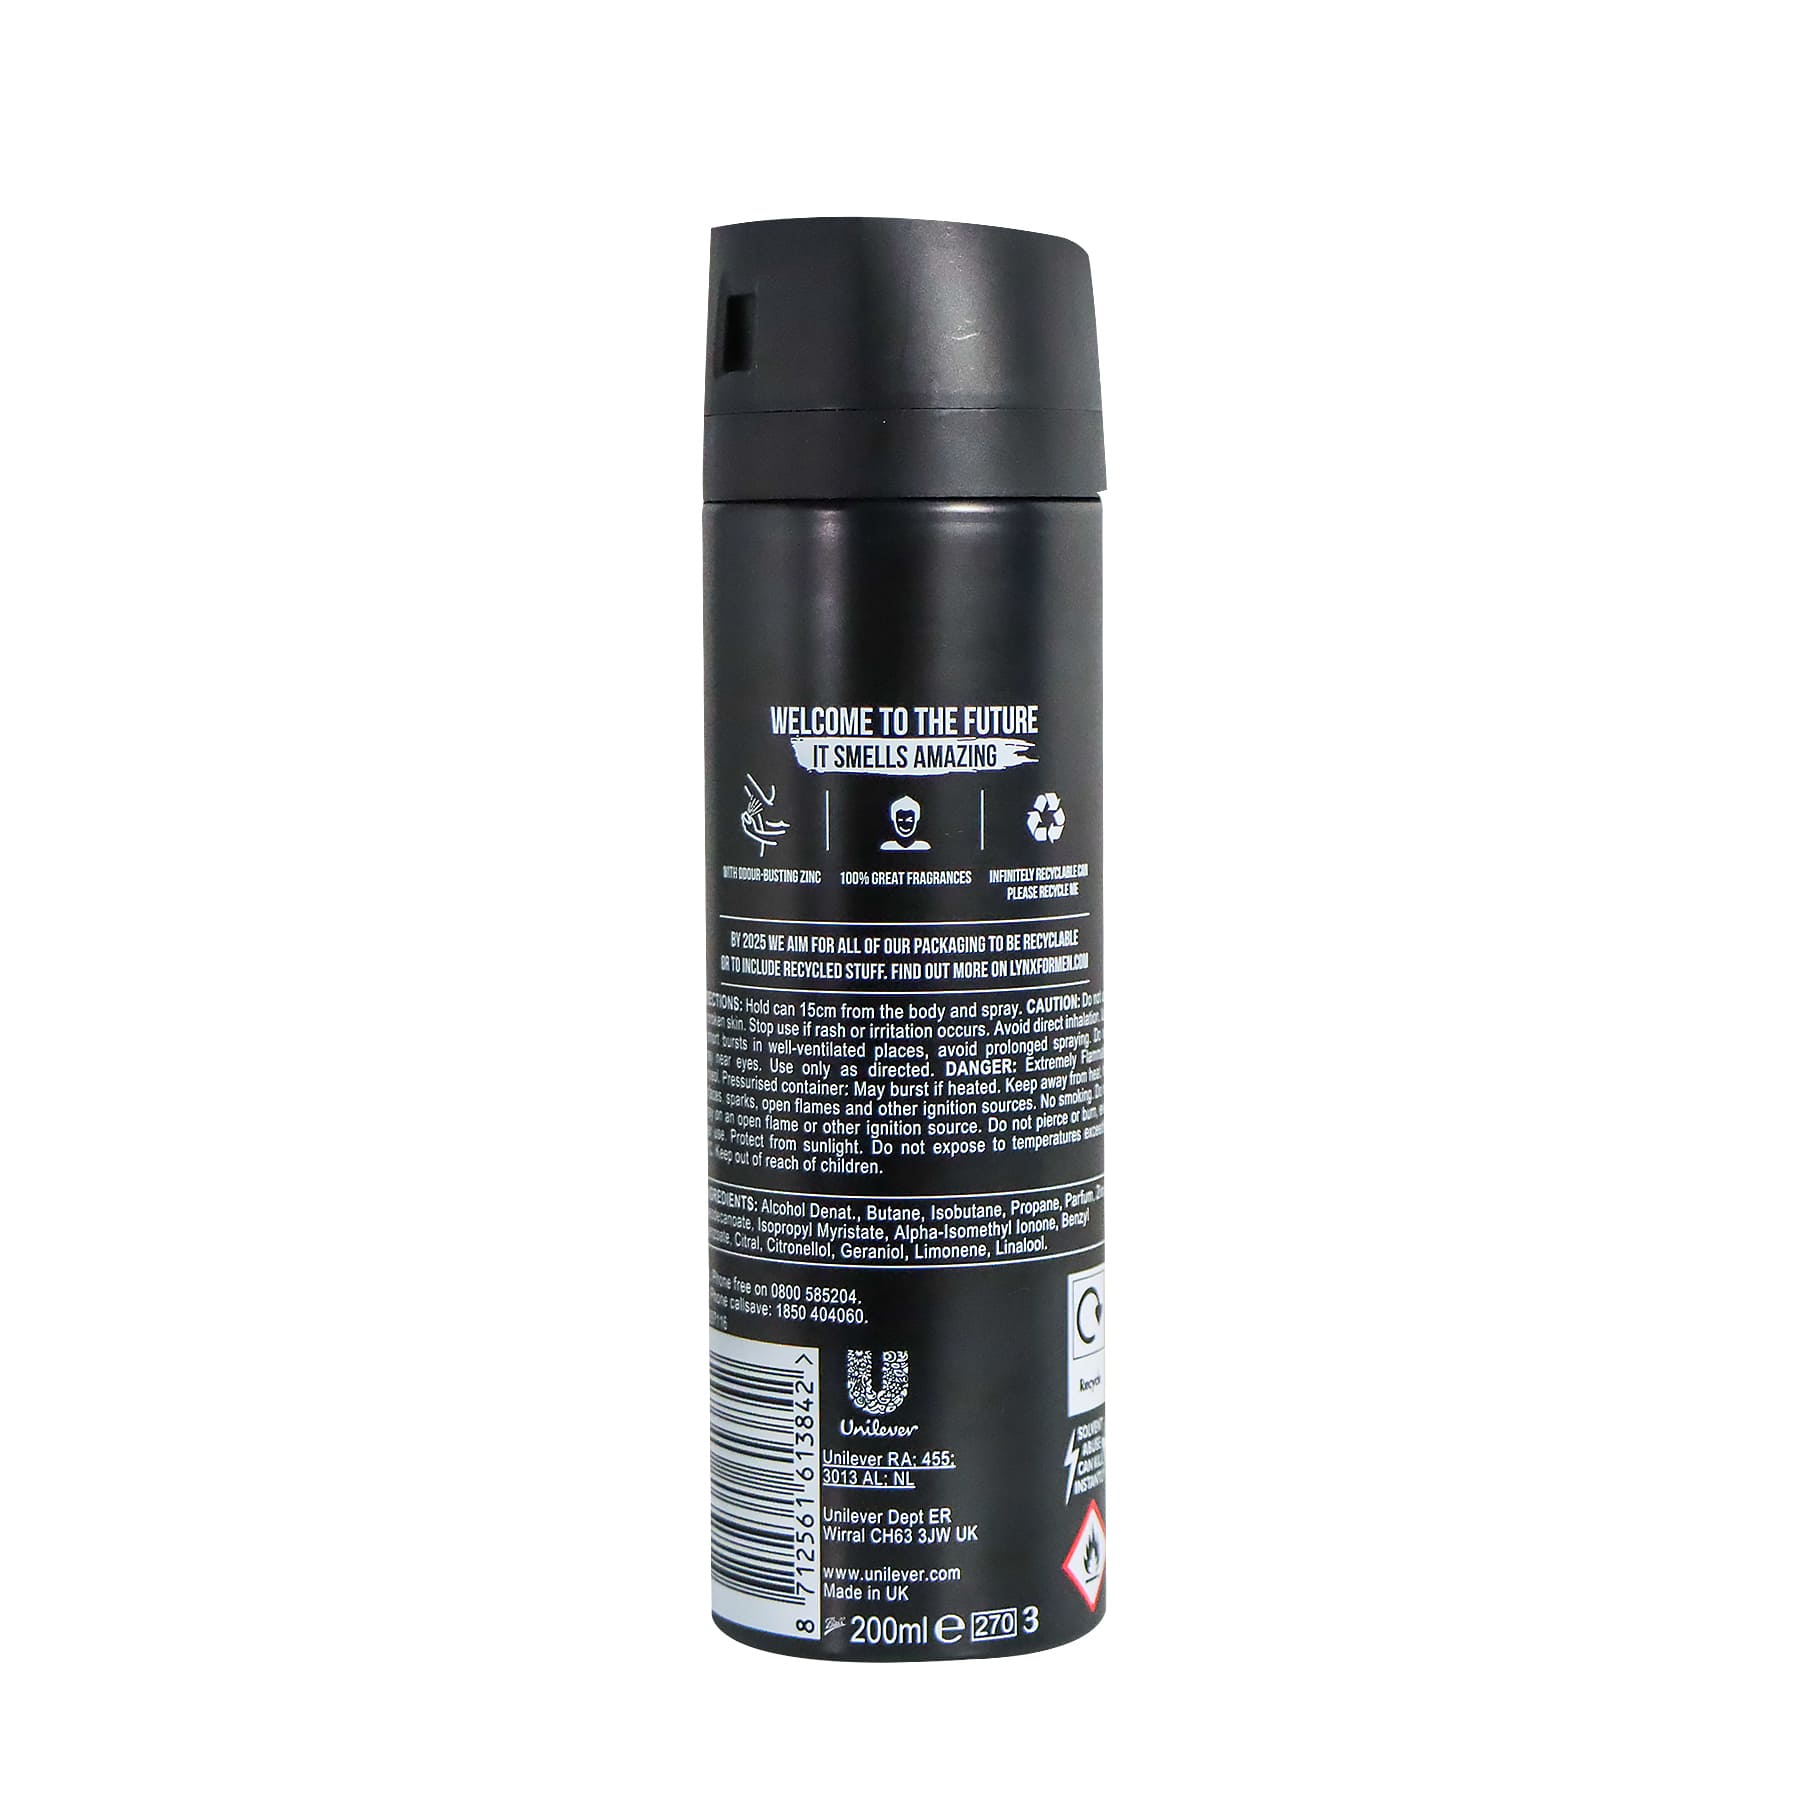 Lynx Deodorant Body Spray 200ml (Black)